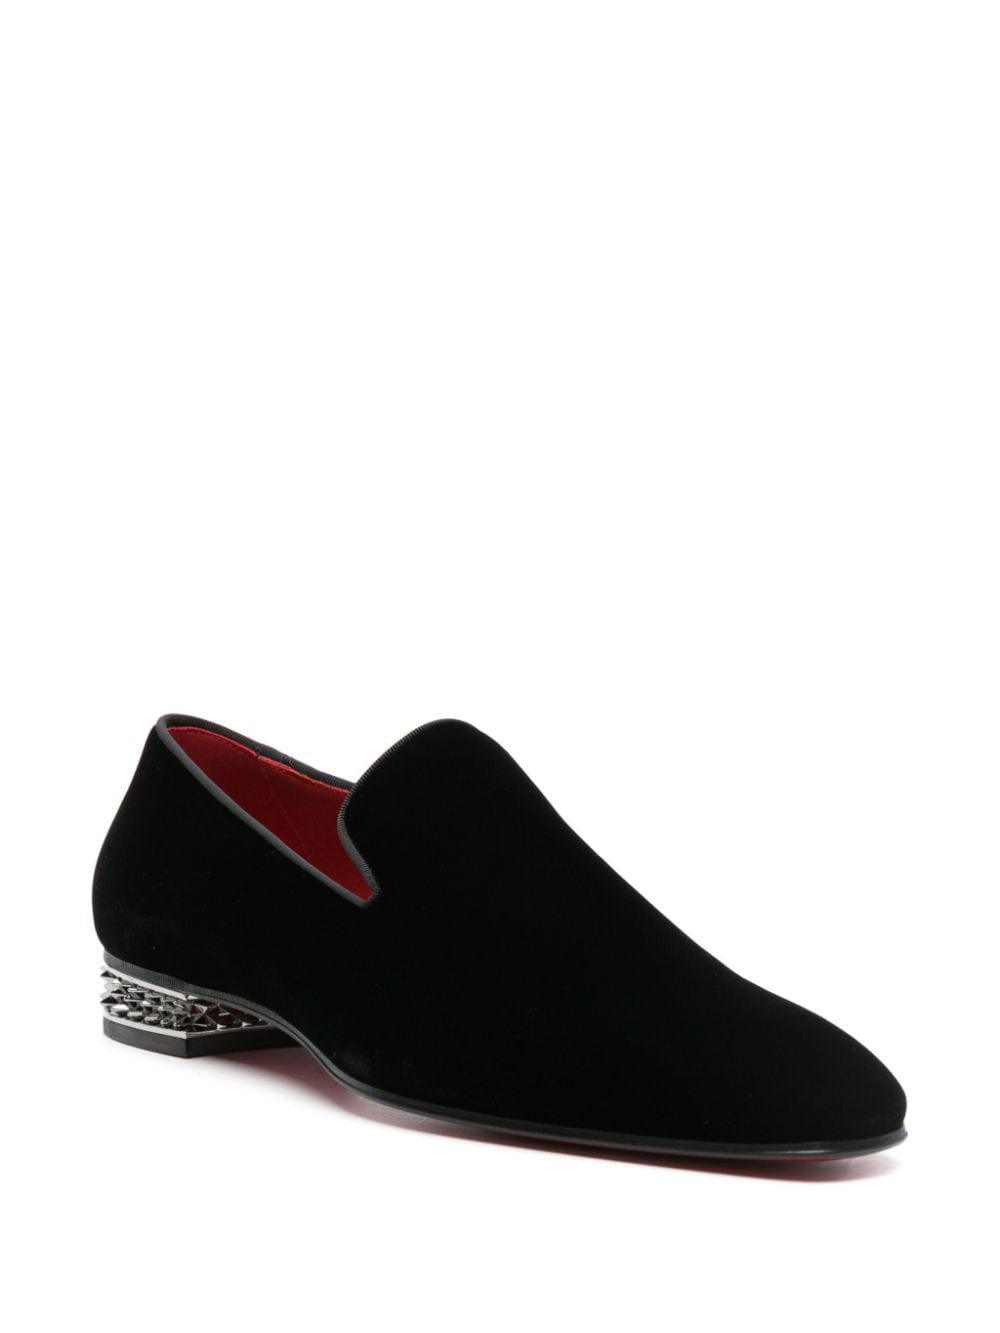 CHRISTIAN LOUBOUTIN Men's Black Velvet Ribbon Trim Low Stacked Heel Spike Stud Shoes